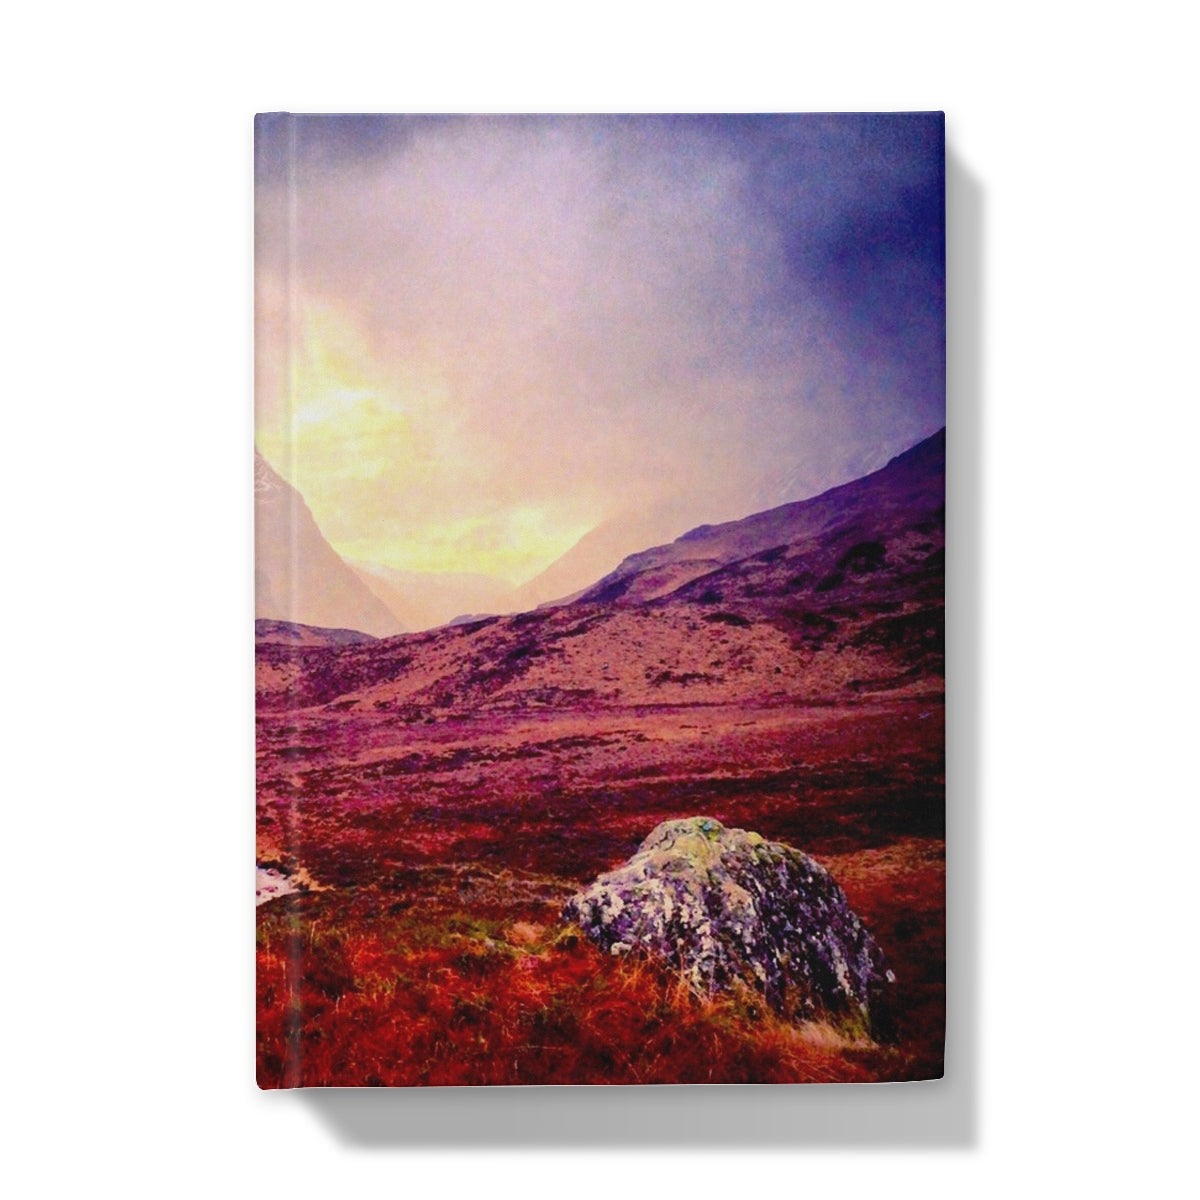 A Brooding Glencoe Art Gifts Hardback Journal-Journals & Notebooks-Glencoe Art Gallery-A4-Plain-Paintings, Prints, Homeware, Art Gifts From Scotland By Scottish Artist Kevin Hunter